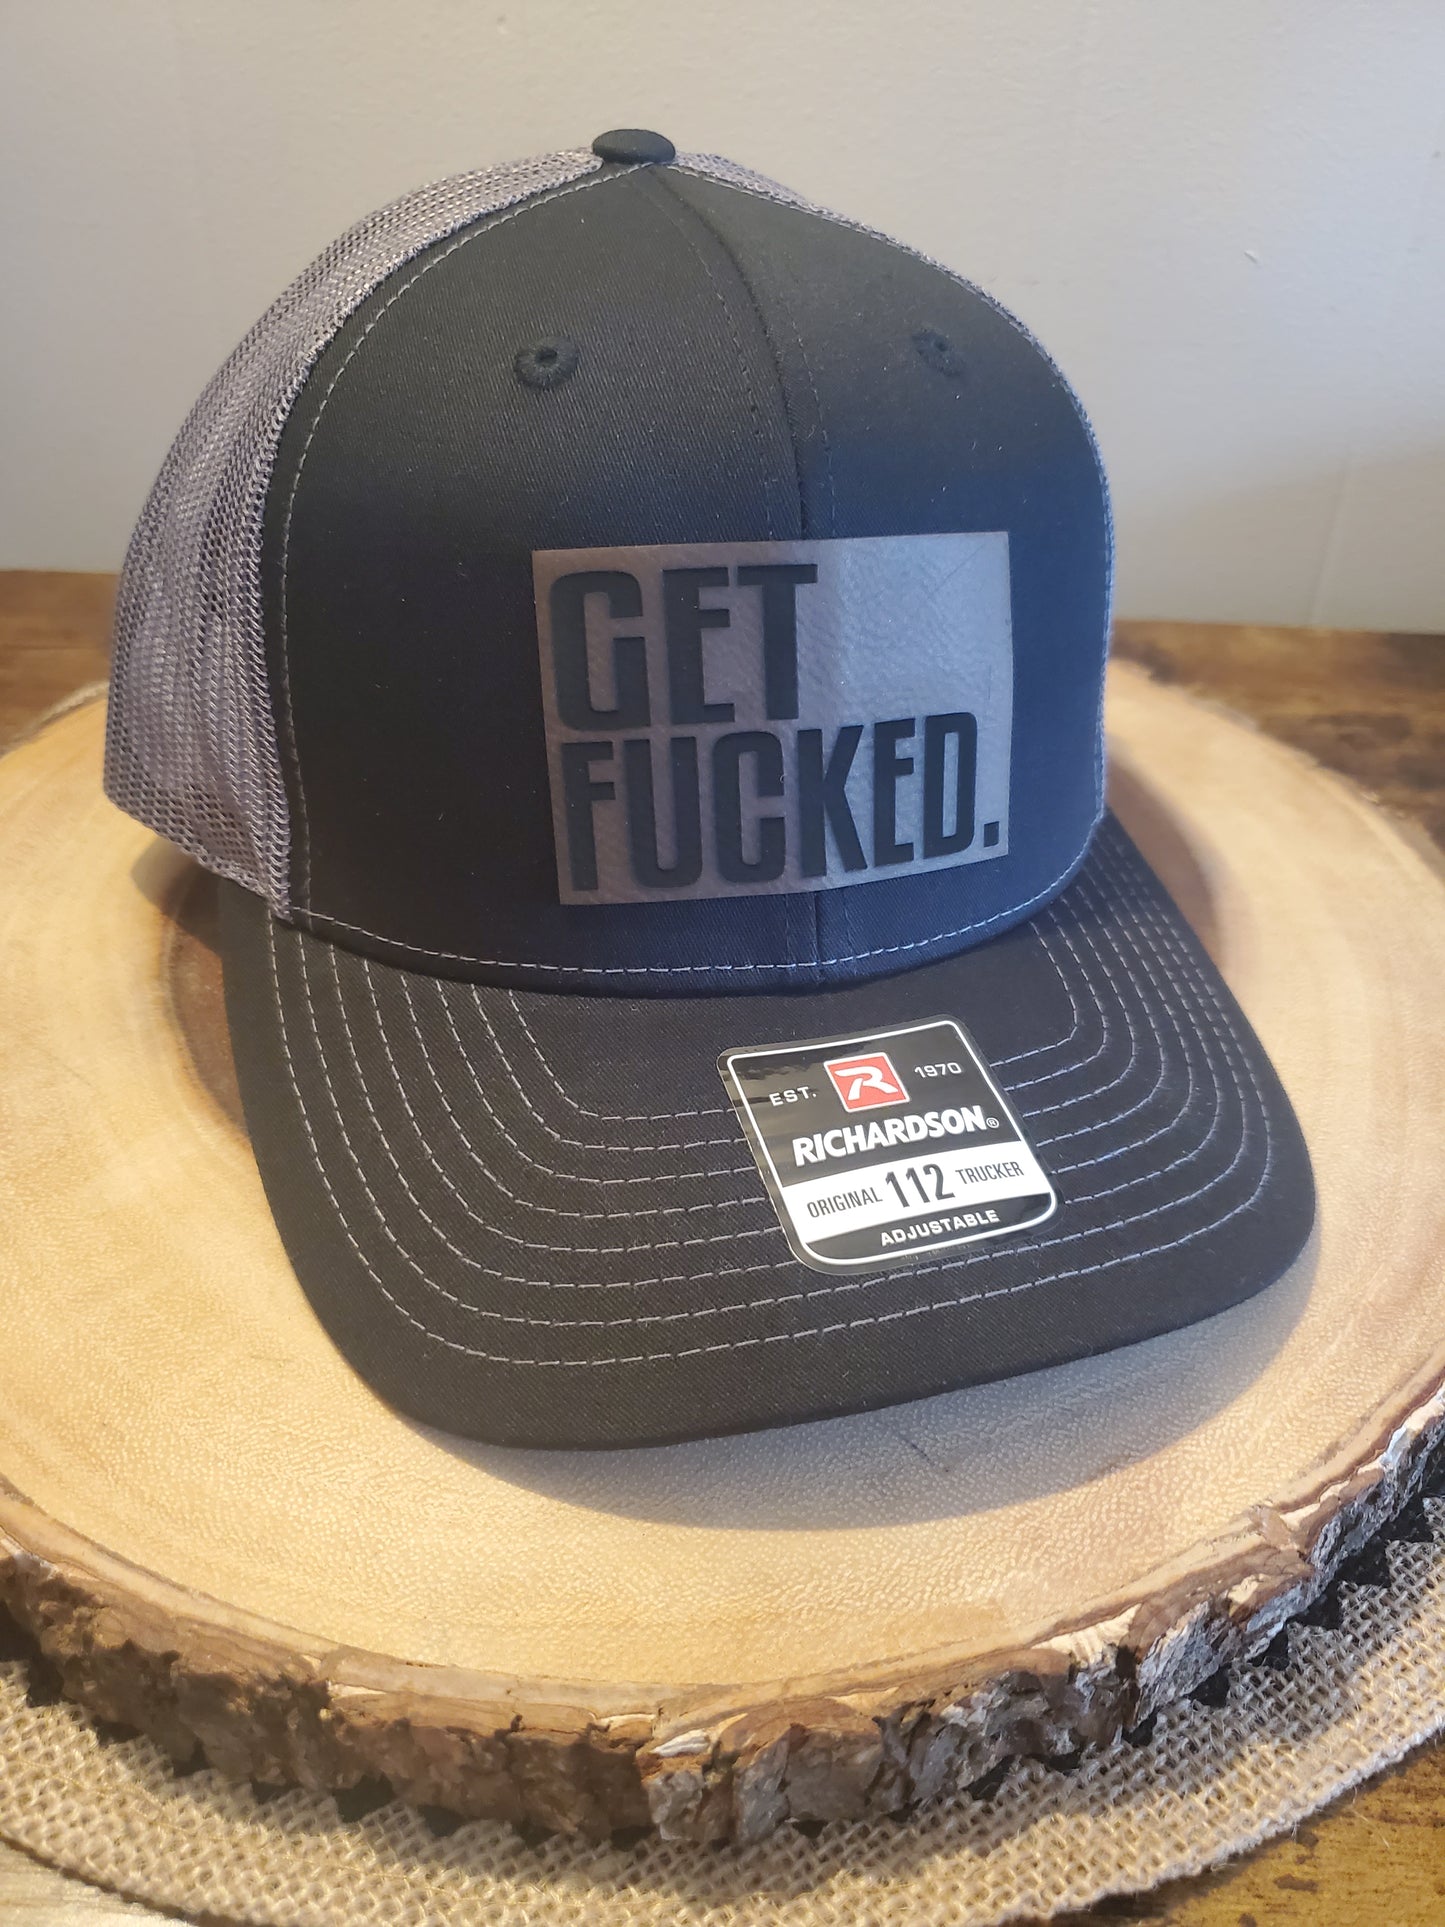 "Get Fucked" hat